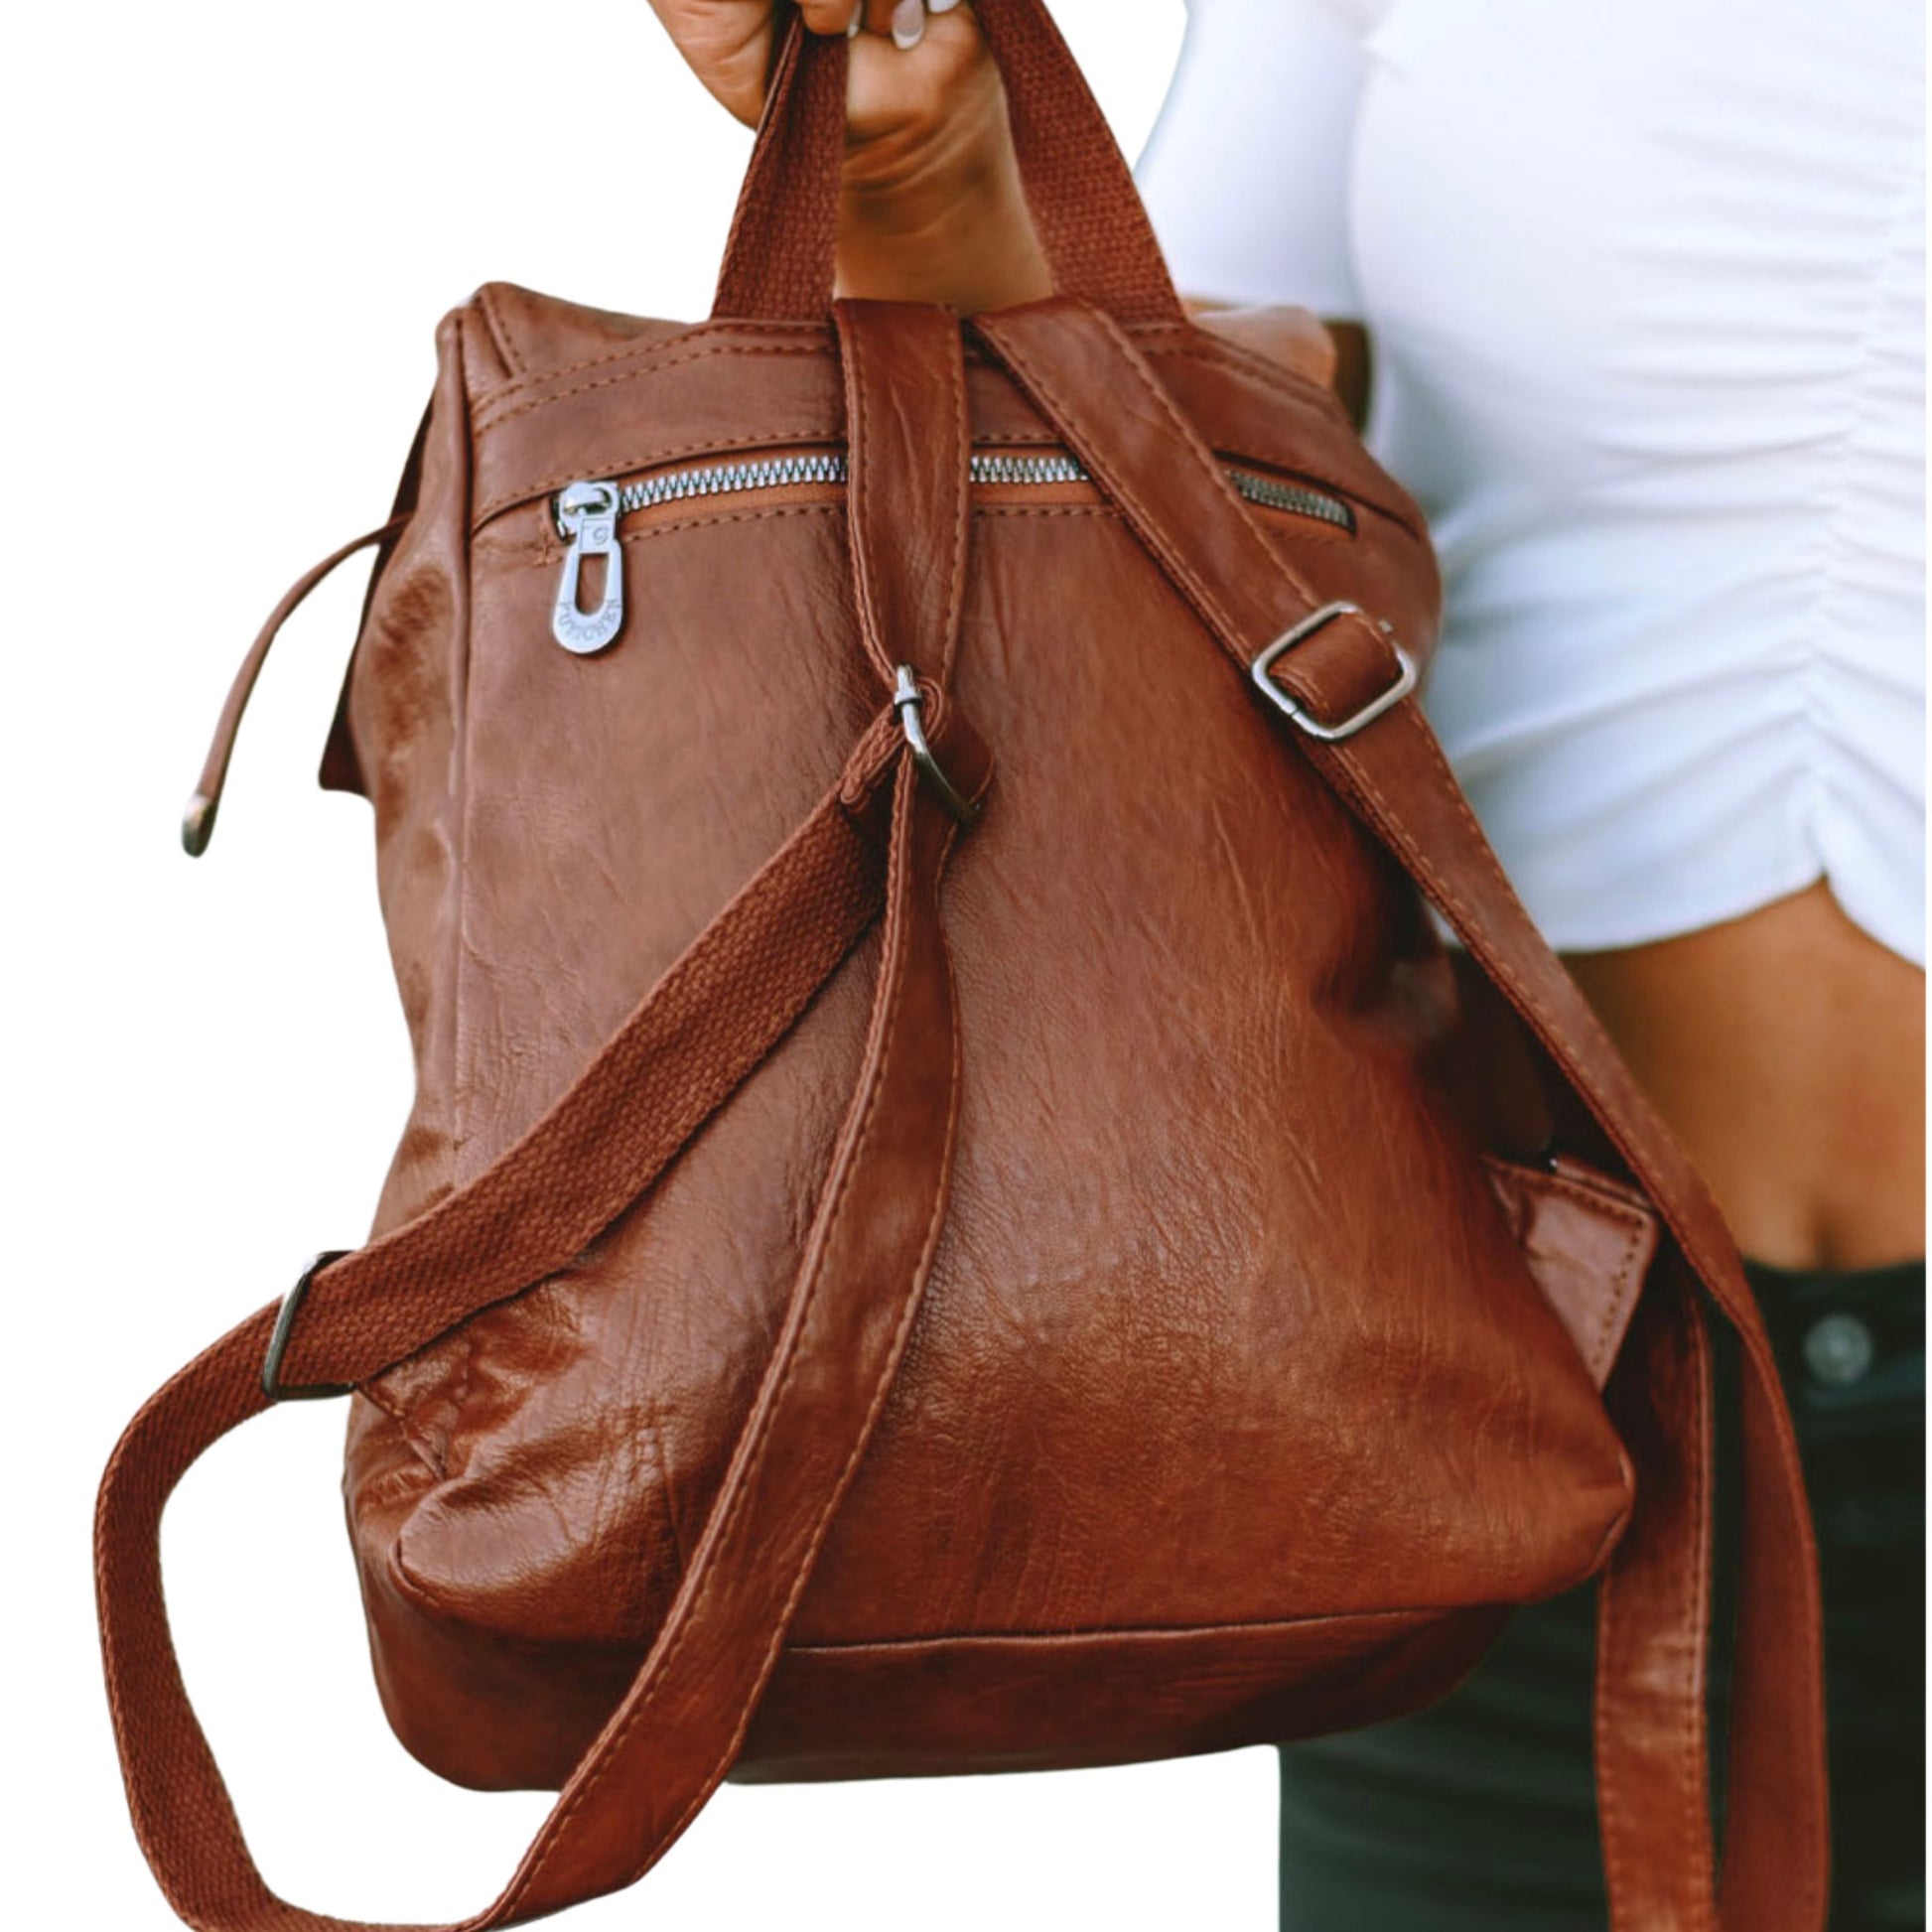 Brown retro backpack - Lavish life LLC 